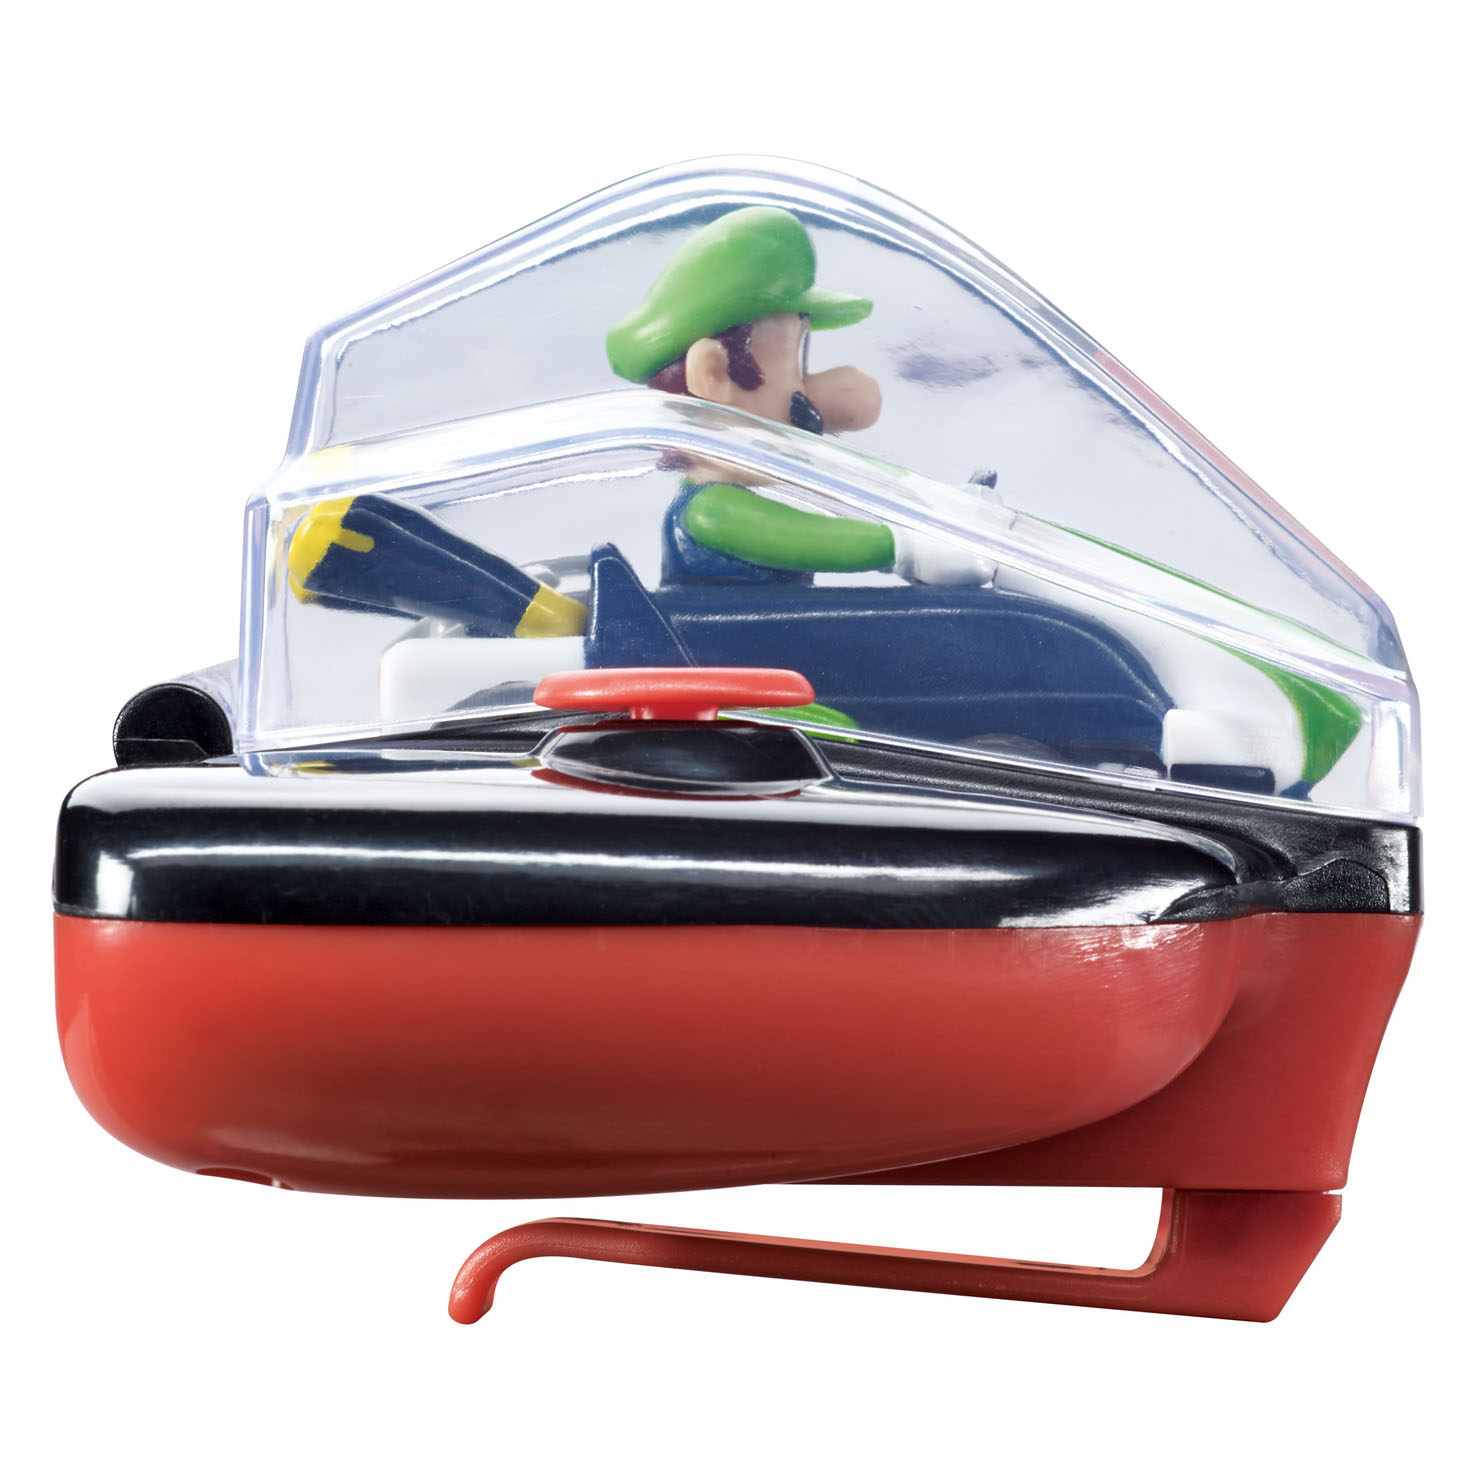 Carrera RC Bestuurbaar Voertuig - Mini Luigi